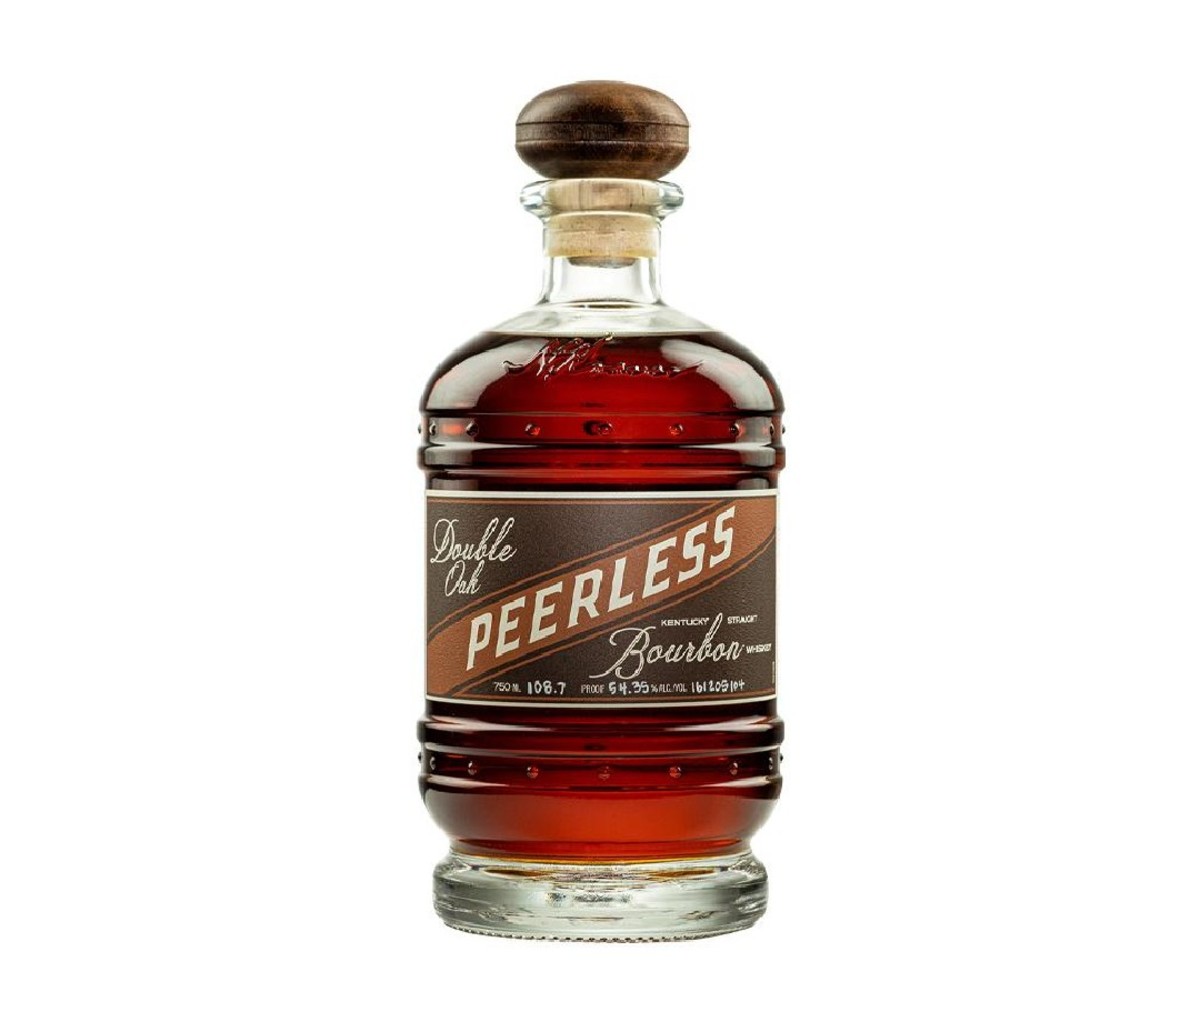 Bottle of Peerless Double Barrel Bourbon